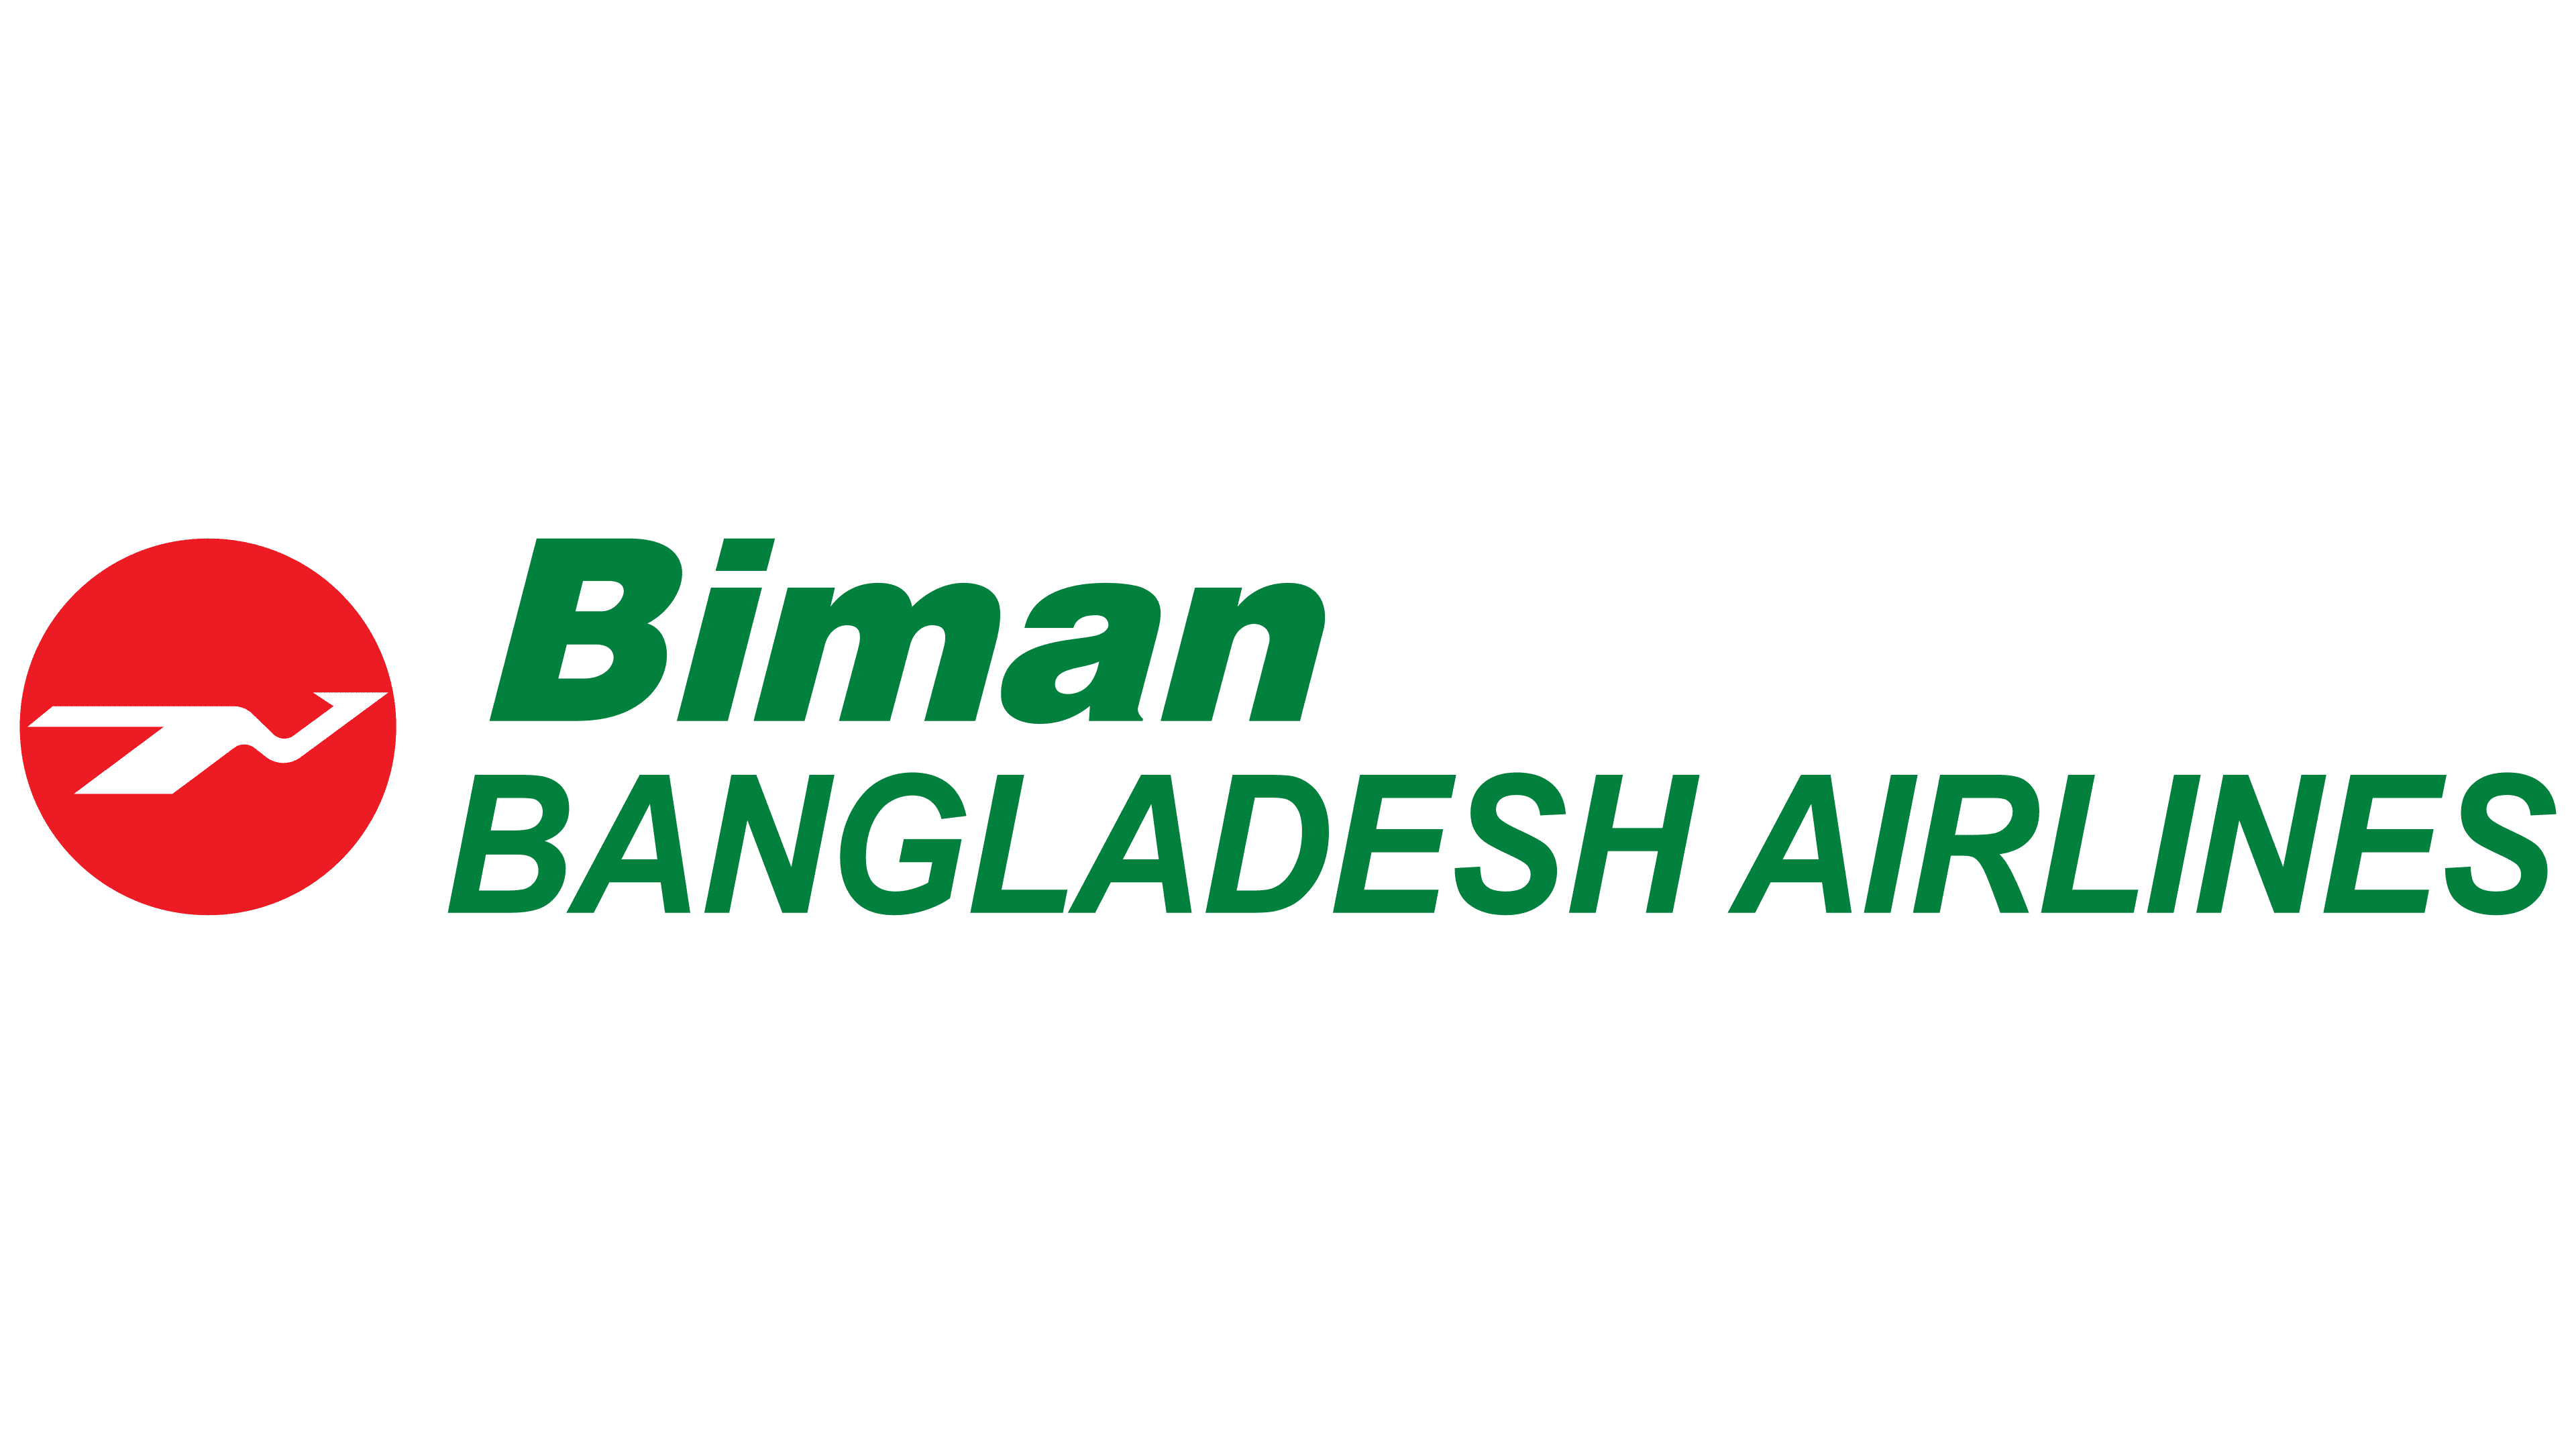 Biman Bangladesh Airlines Logo, symbol, meaning, history, PNG, brand